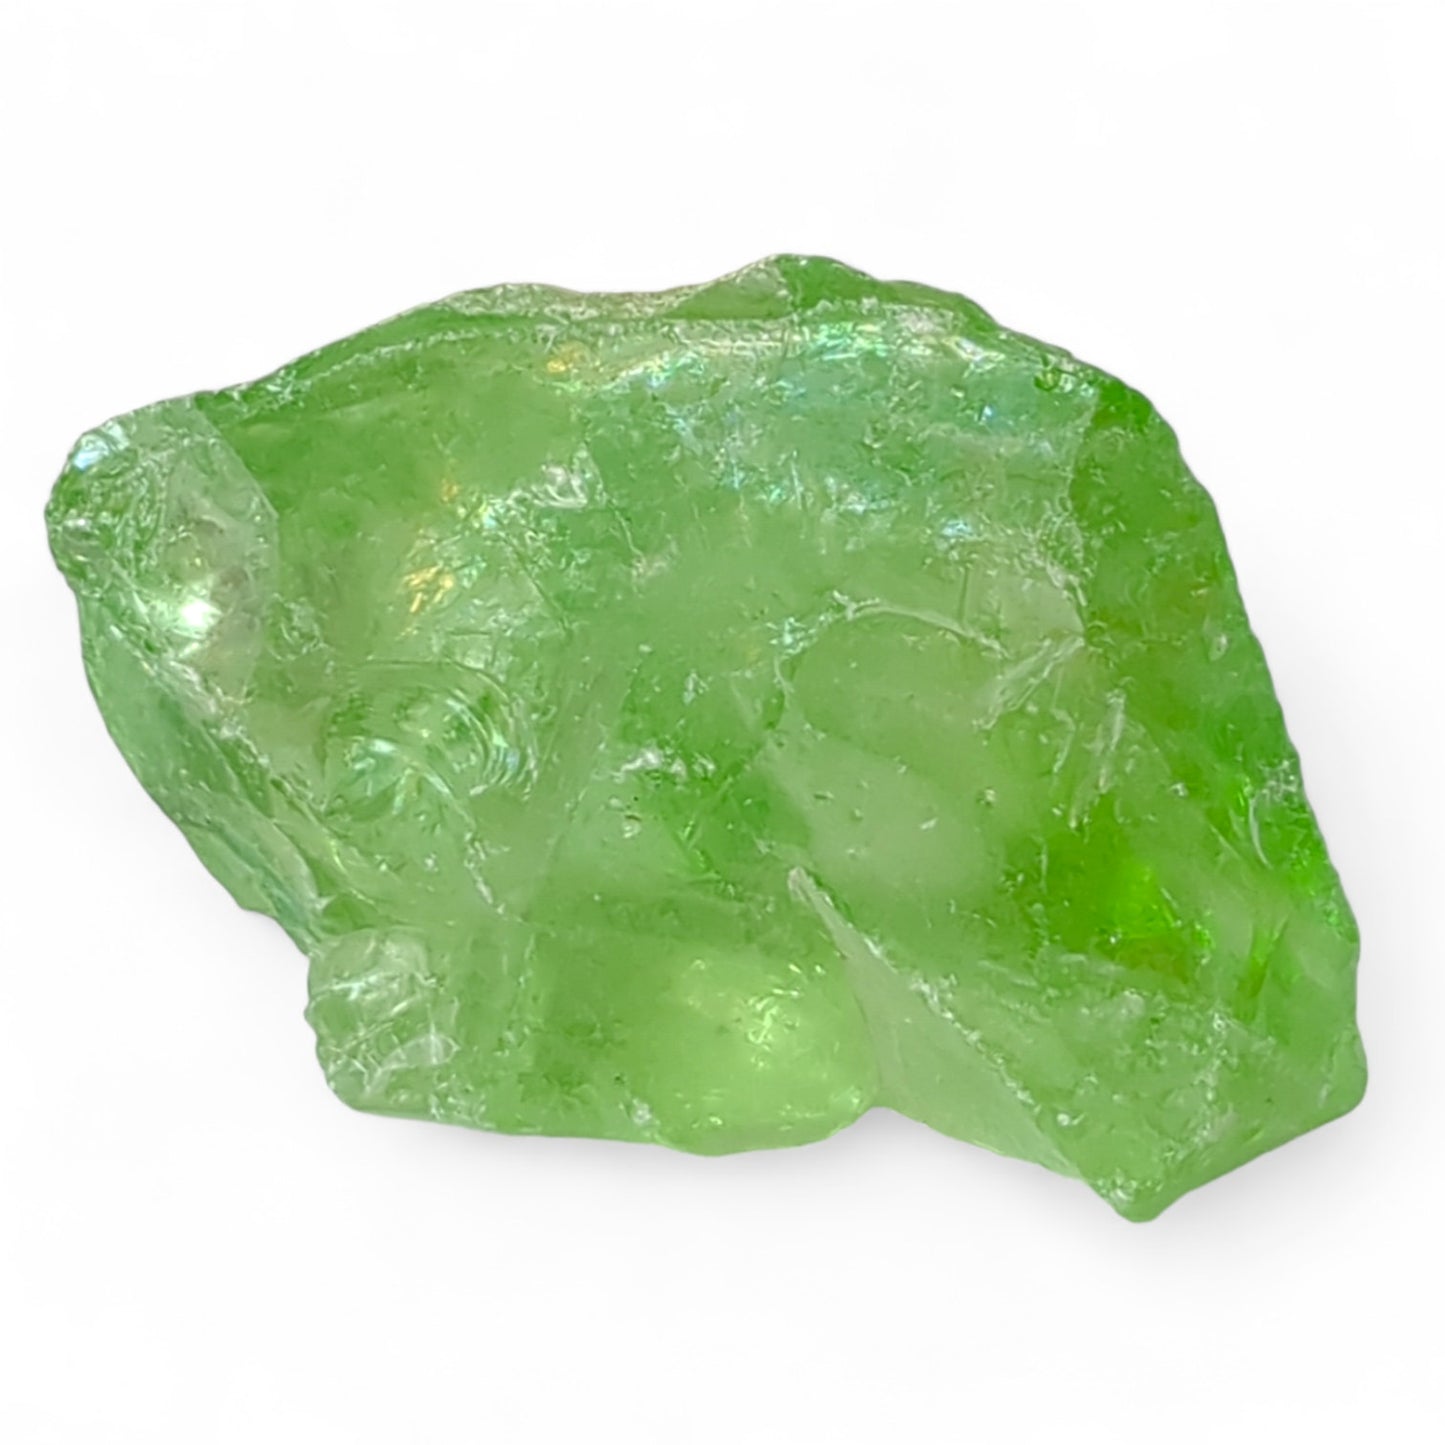 Mint Green Art Glass Cullet Glowing Translucent Manganese Slag Glass #4GM95